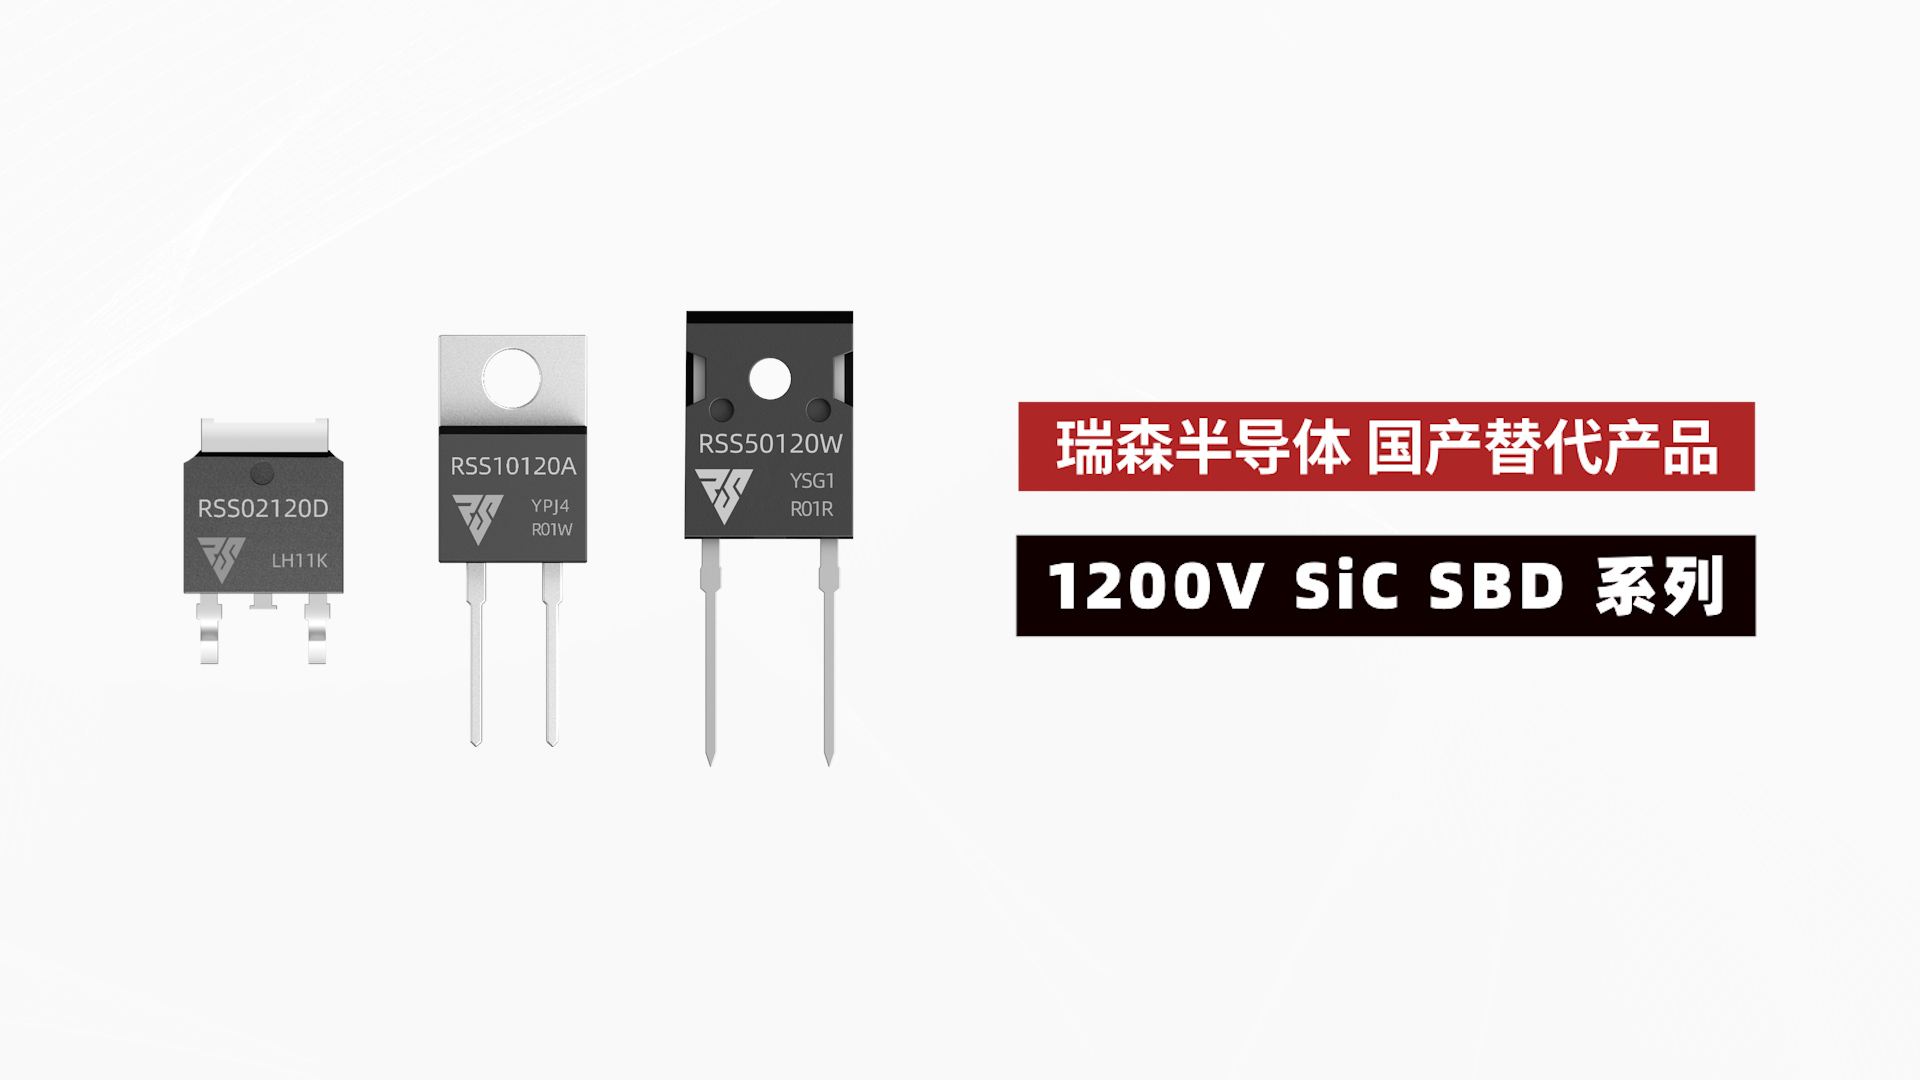 1200V SiC SBD系列在各大領域的應用